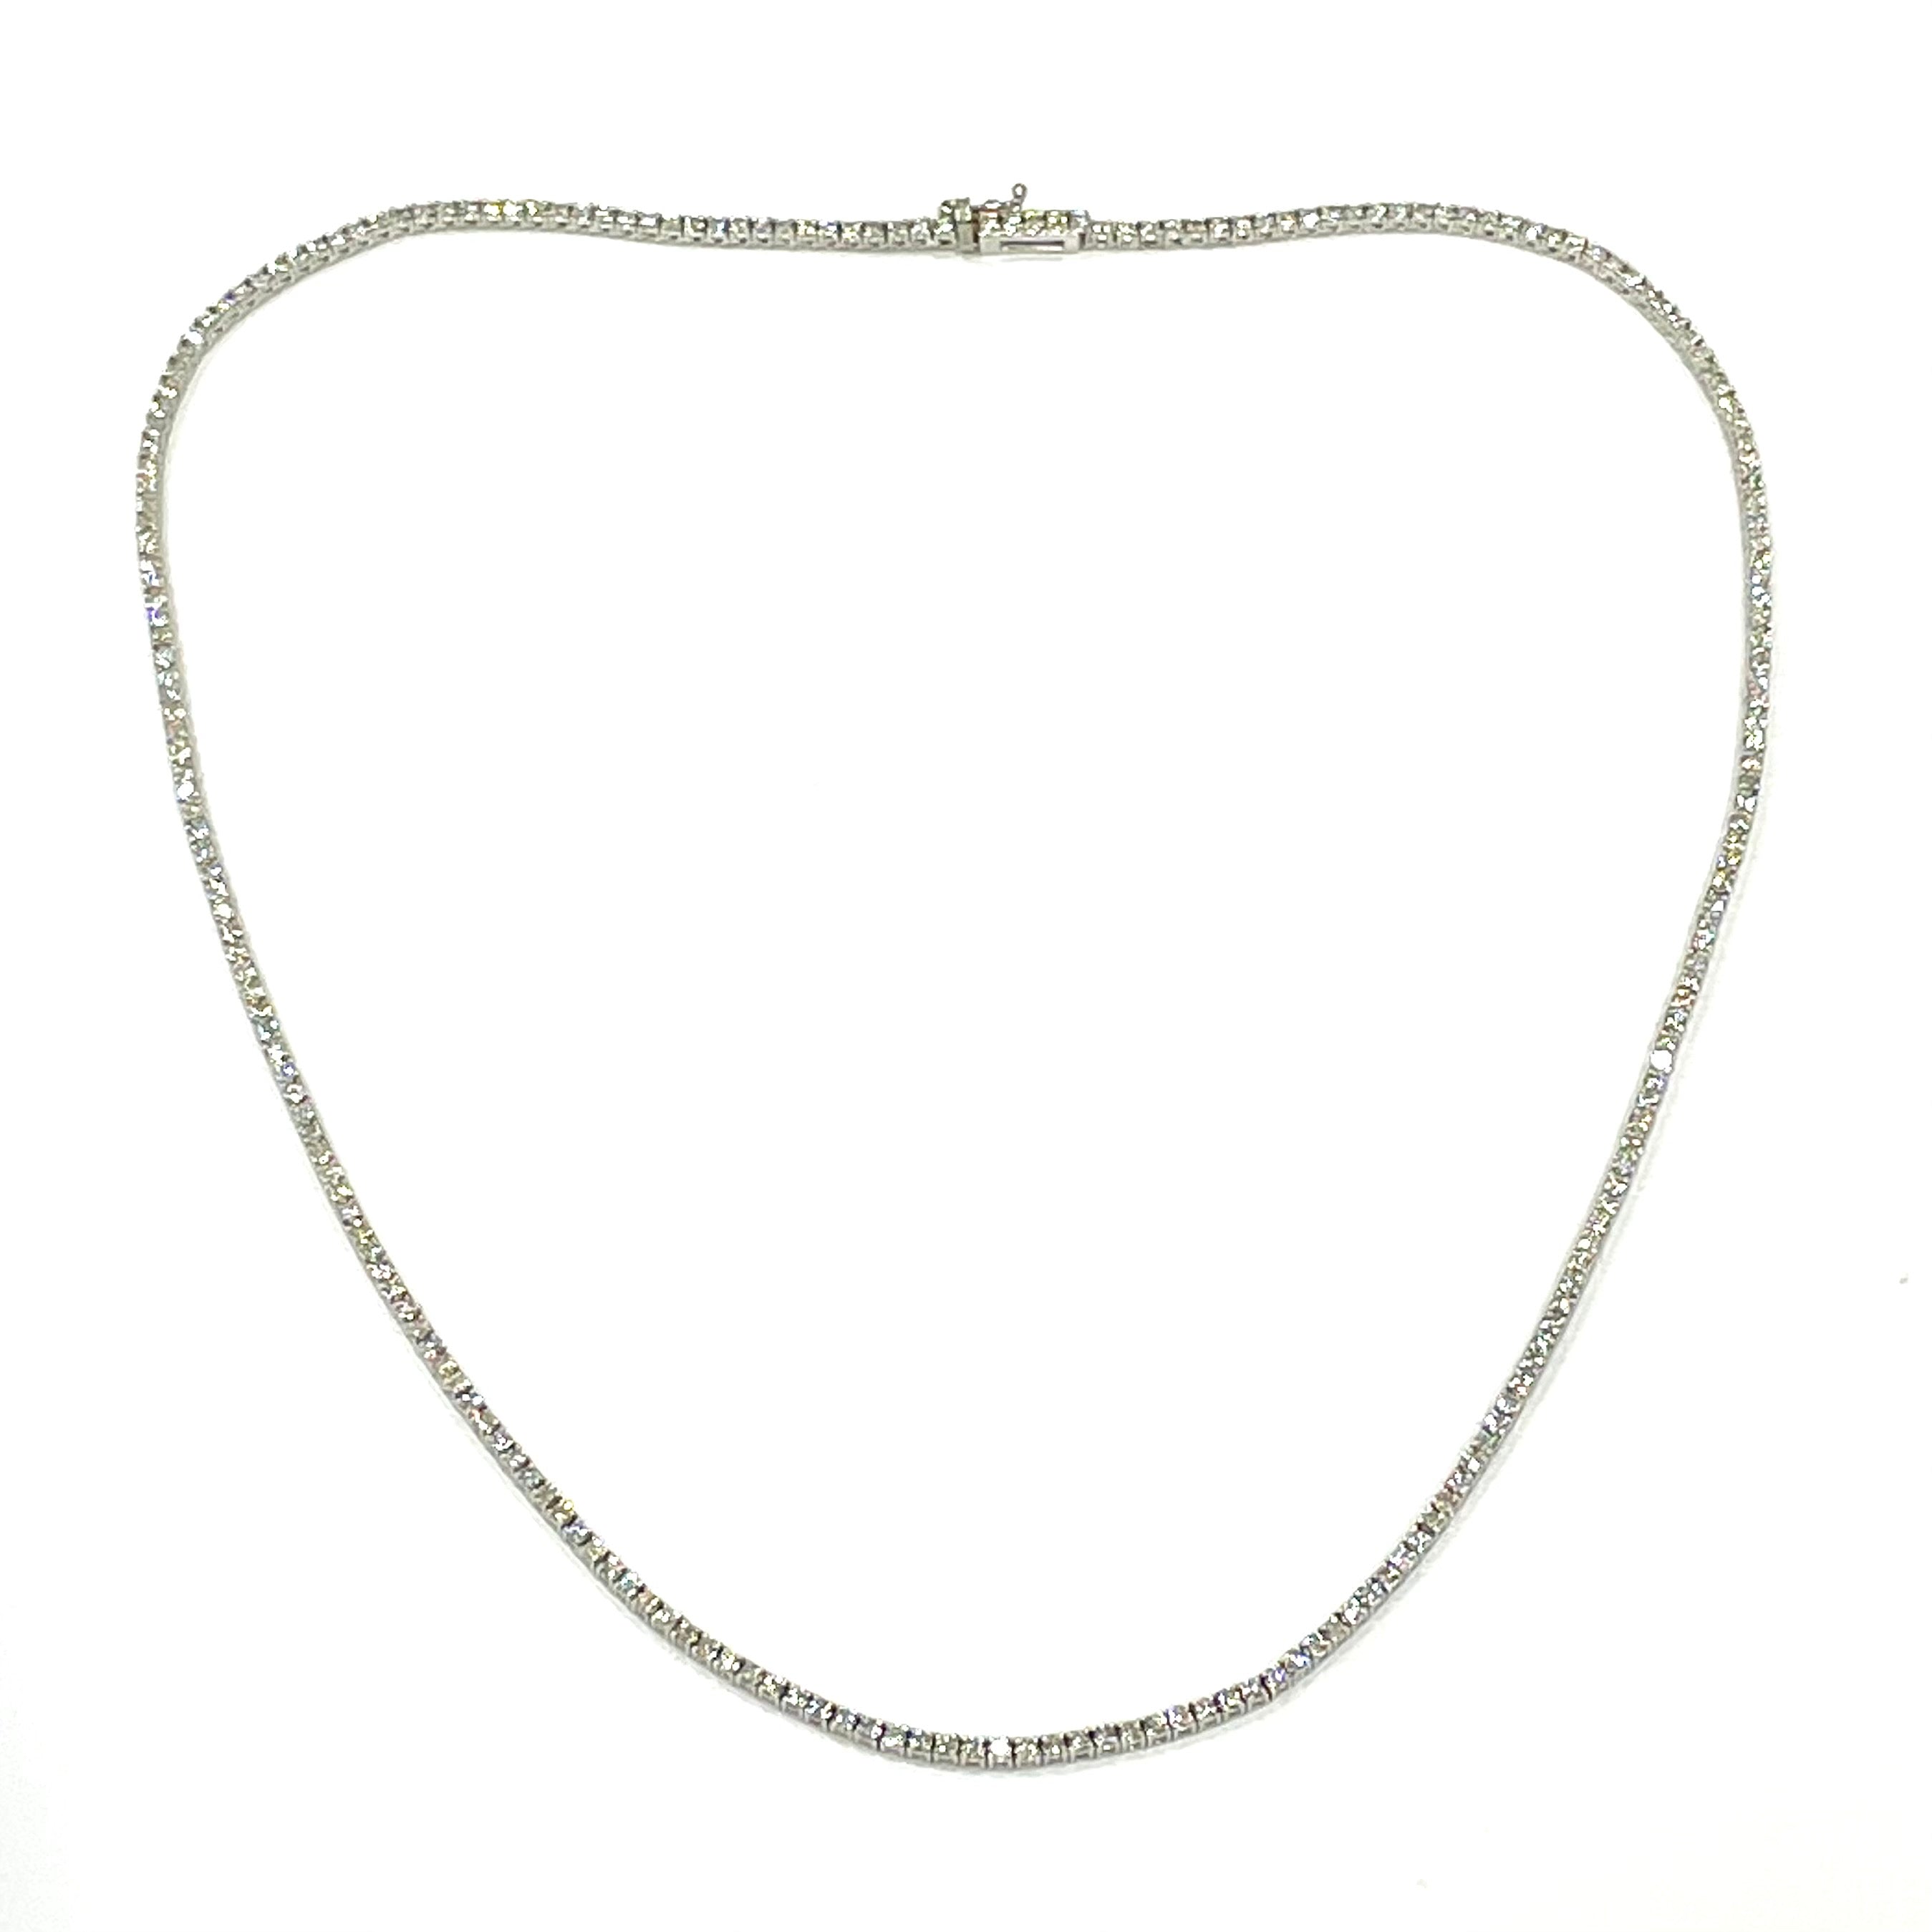 4.51CT Diamond Tennis Necklace 14K White Gold 16.5"